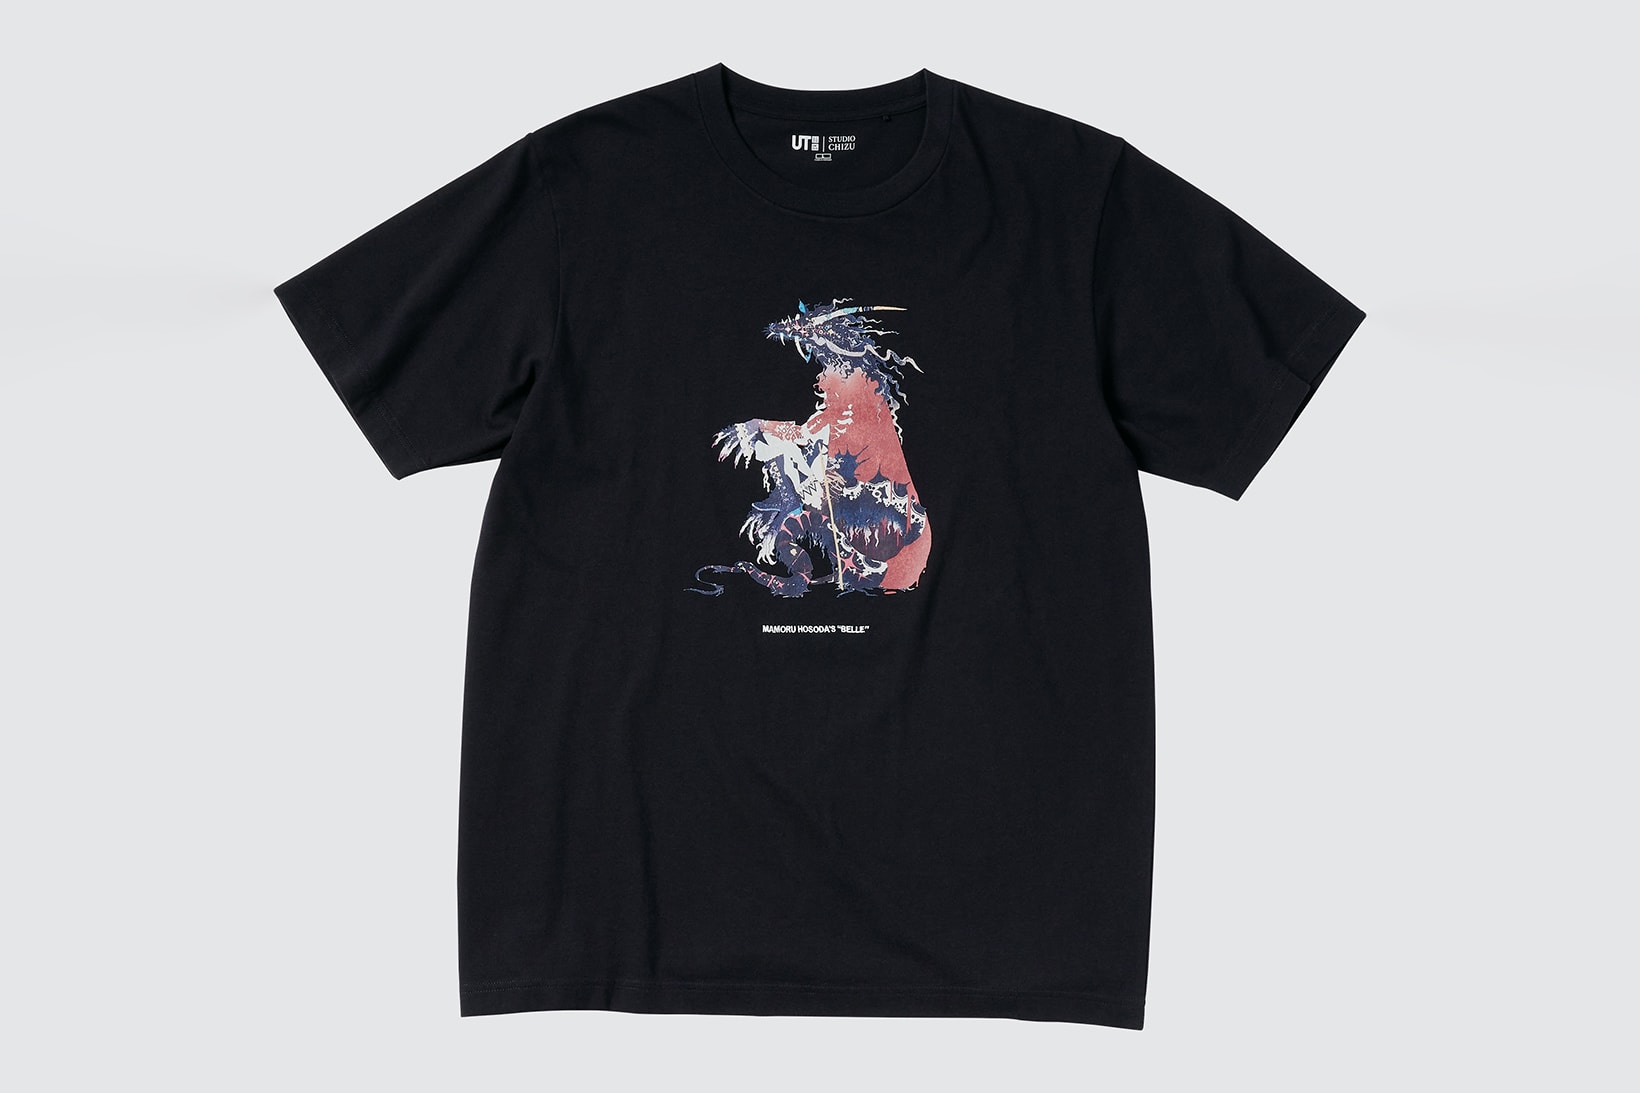 UNIQLO UT Mamoru Hosoda T-Shirt Collection The Dragon and The Freckled Princess